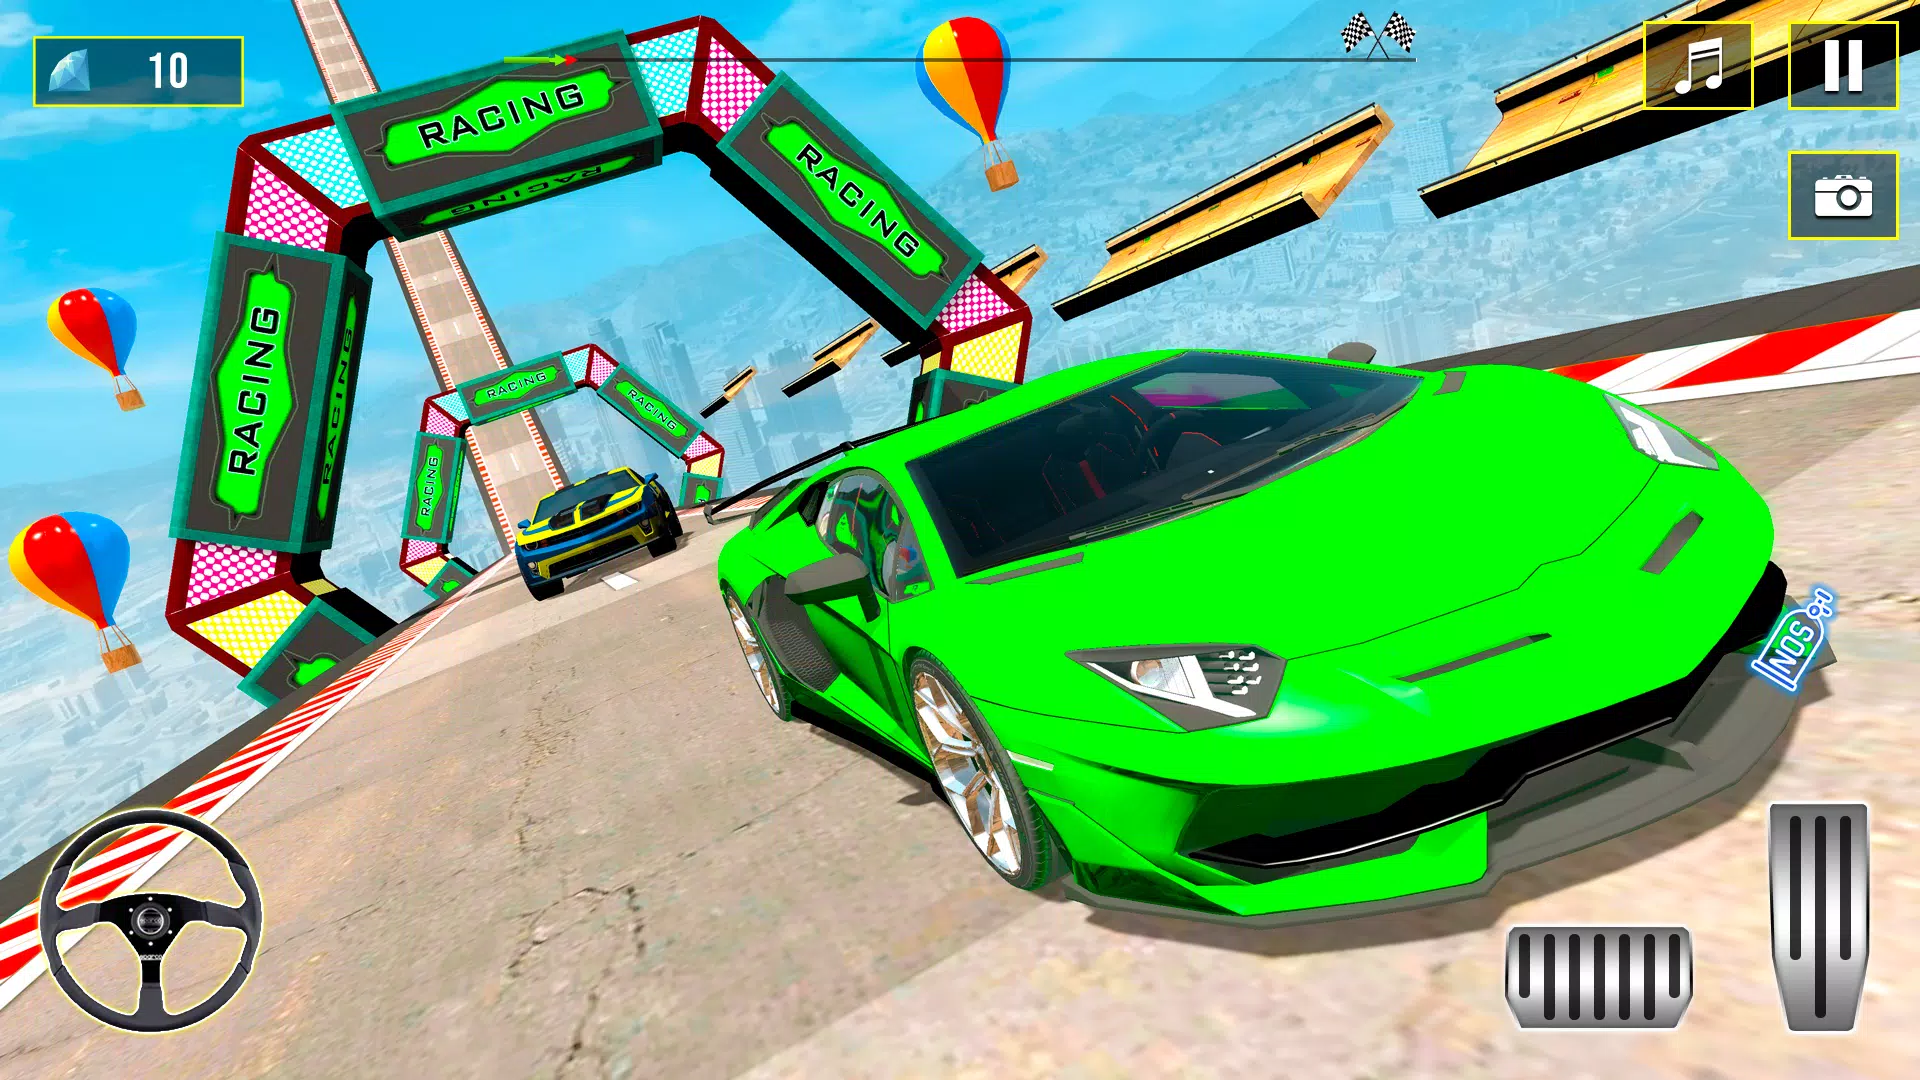 Jogos 3D Gt Car Stunt Master versão móvel andróide iOS apk baixar